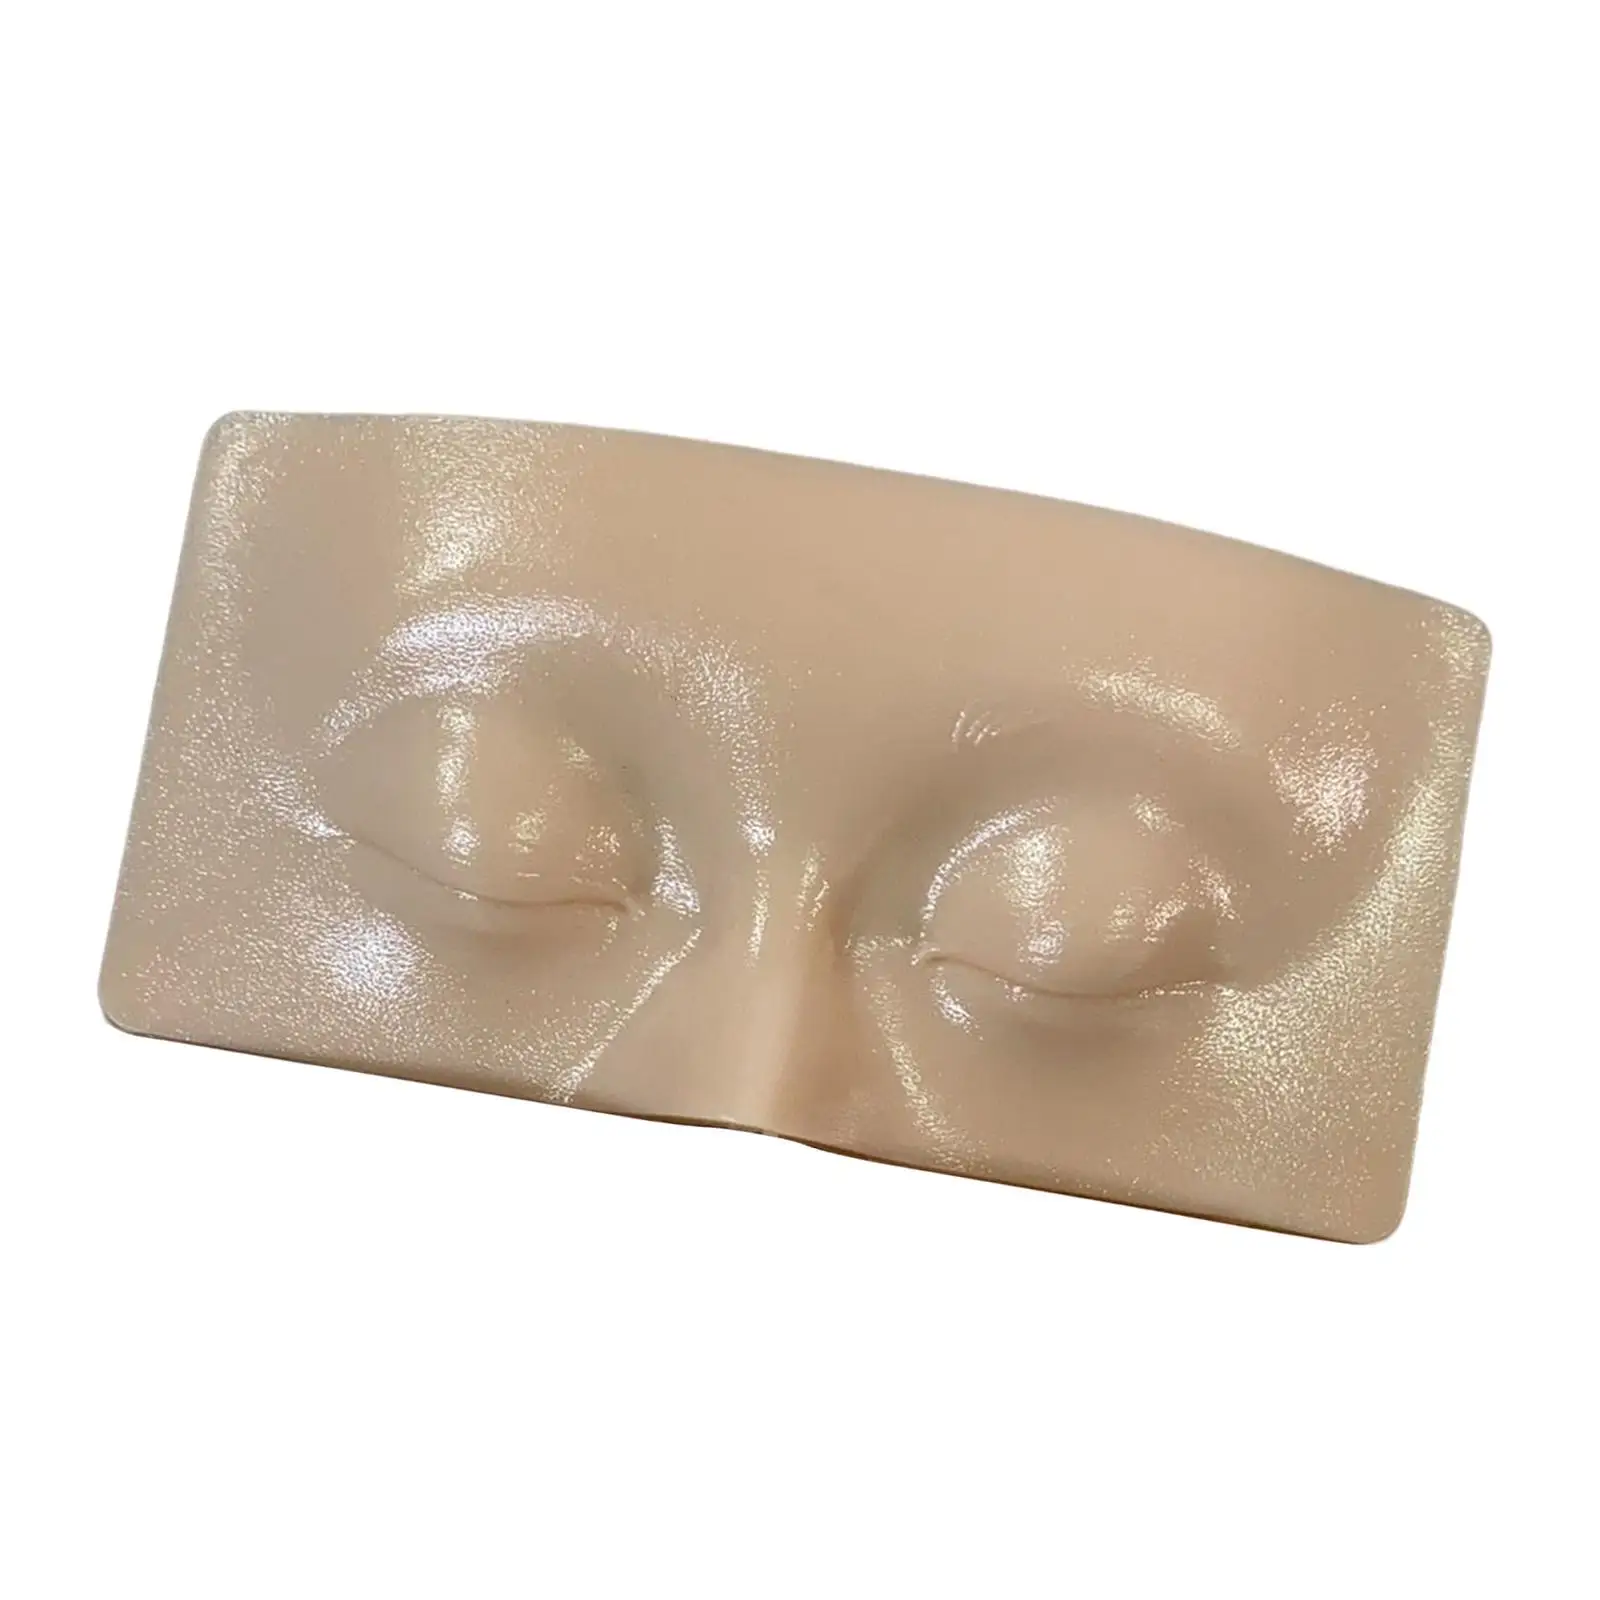 Reusable Practicing Makeup Board Durable Soft 3D Makeup Practice Face for Massaging Eyeliner Eyebrow Training Students Beginners